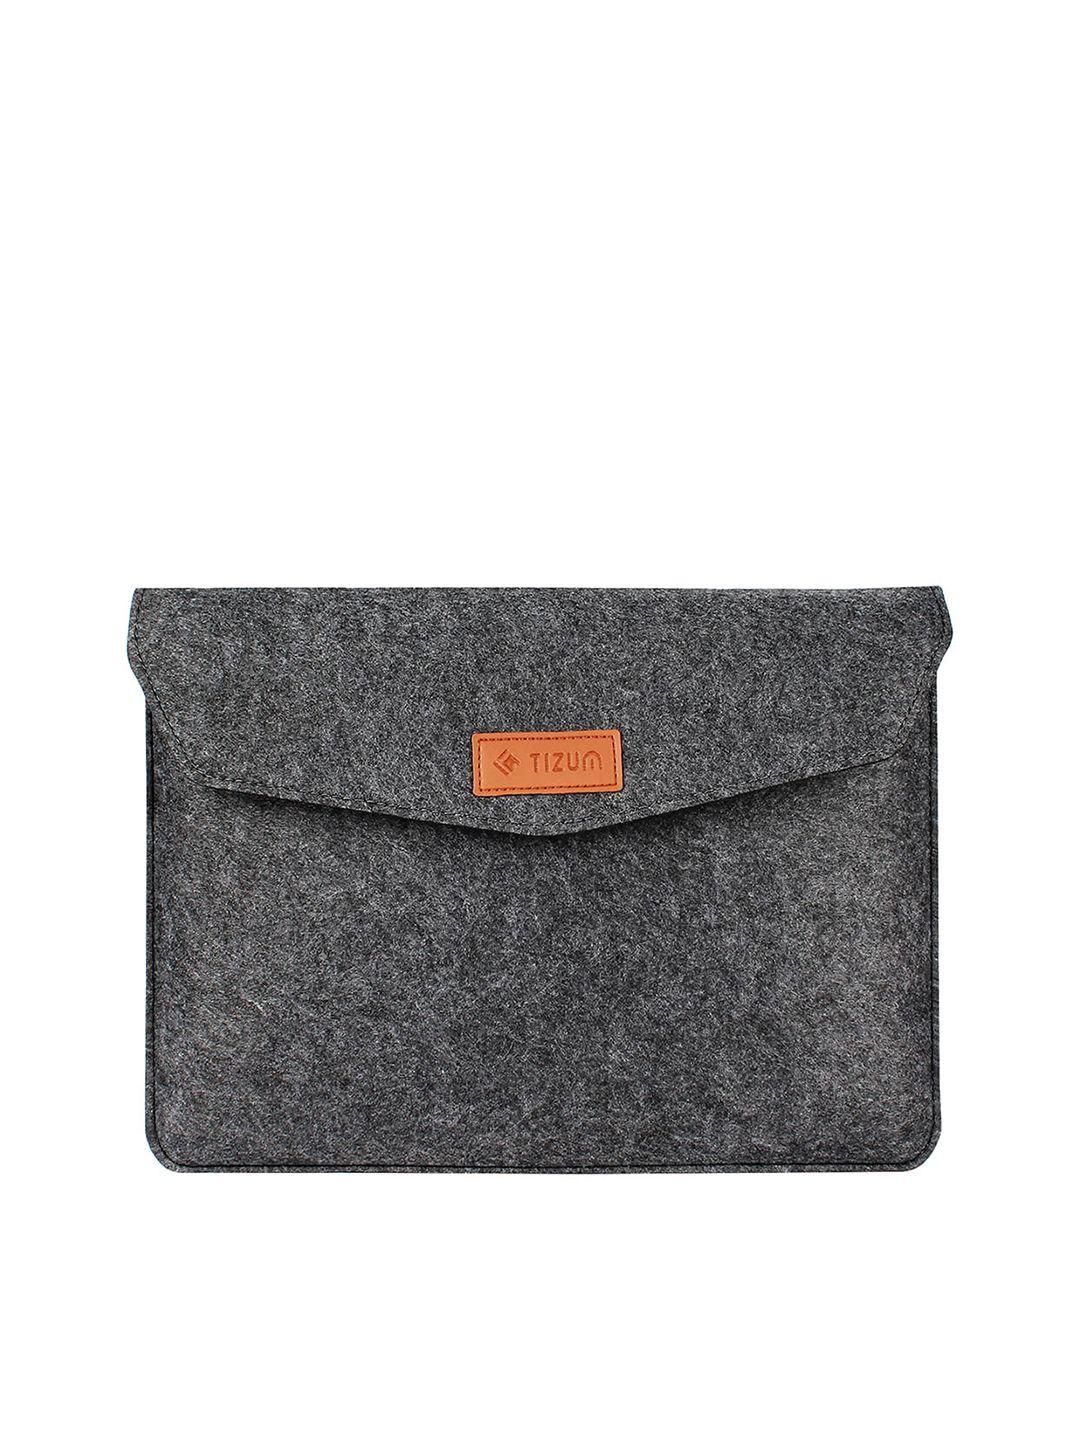 tizum unisex grey 15.6 inch laptop sleeve